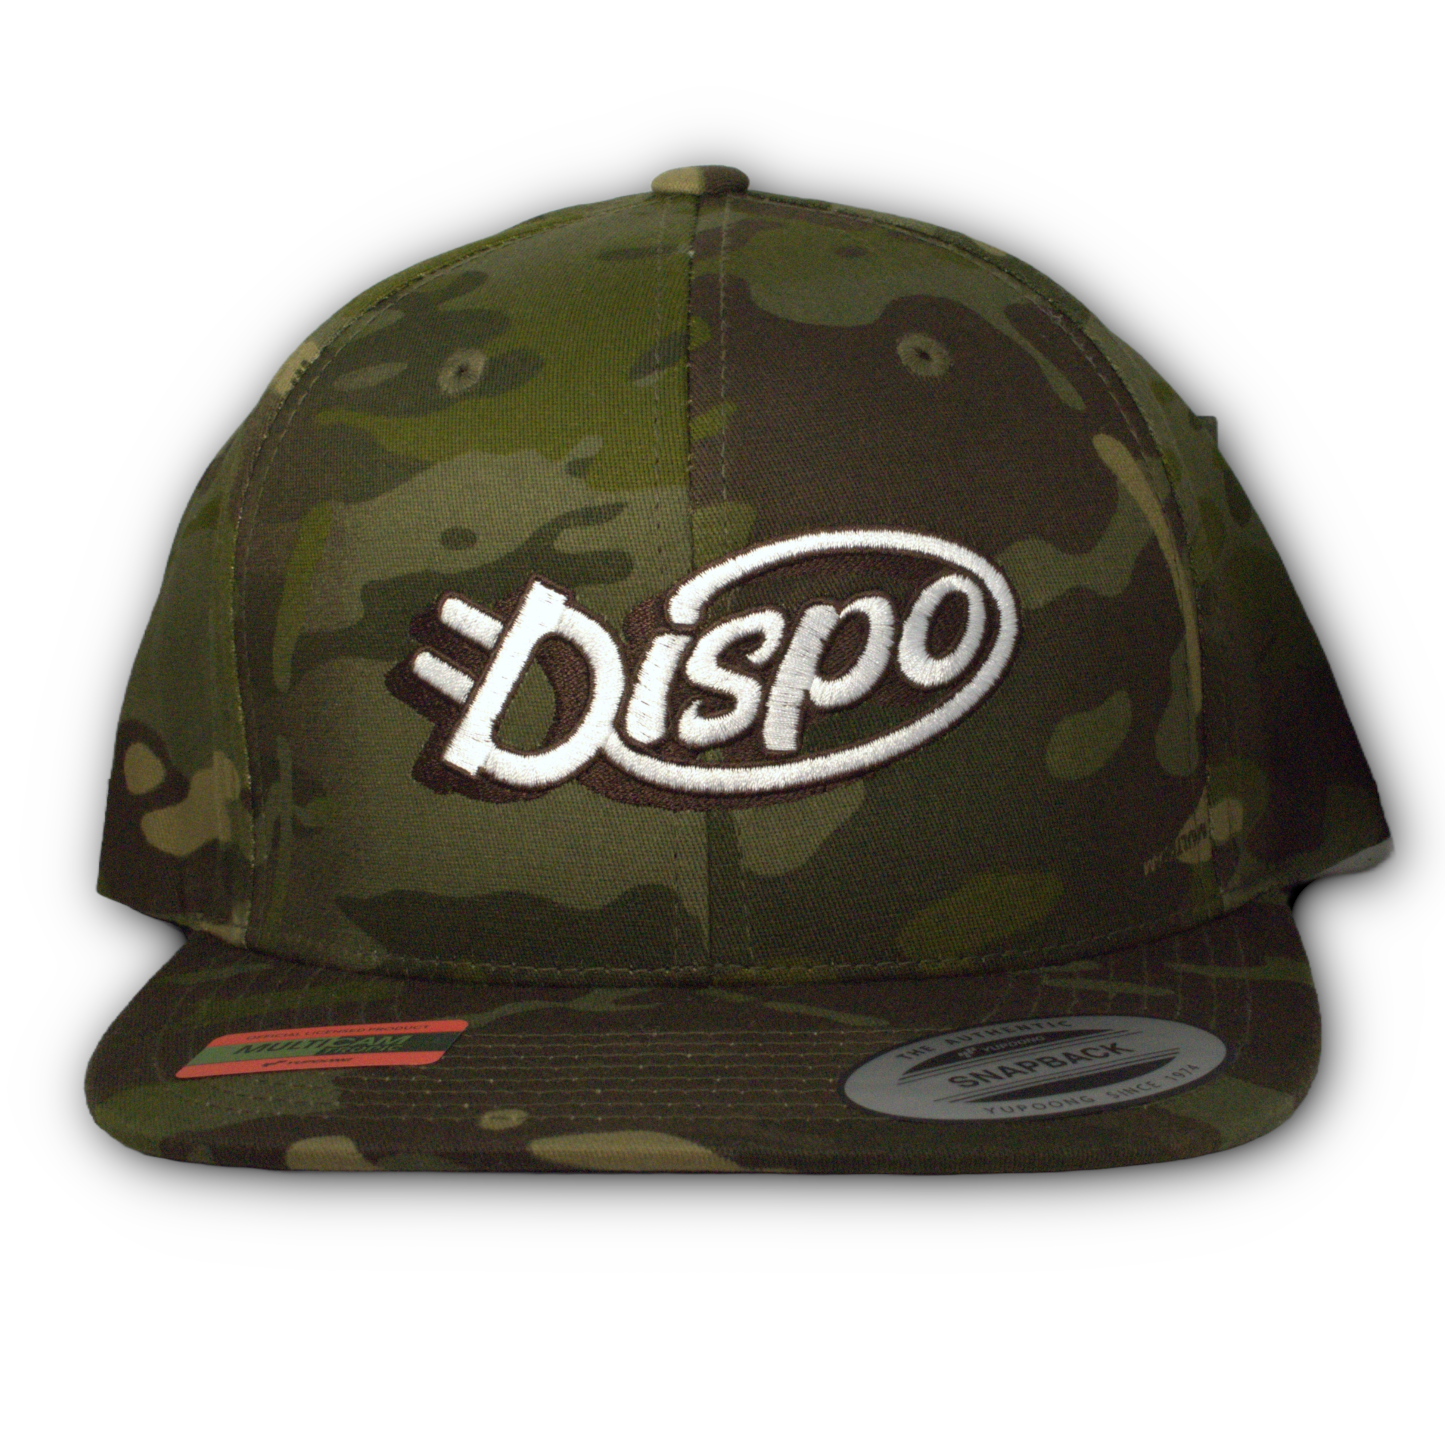 Dispo Hats